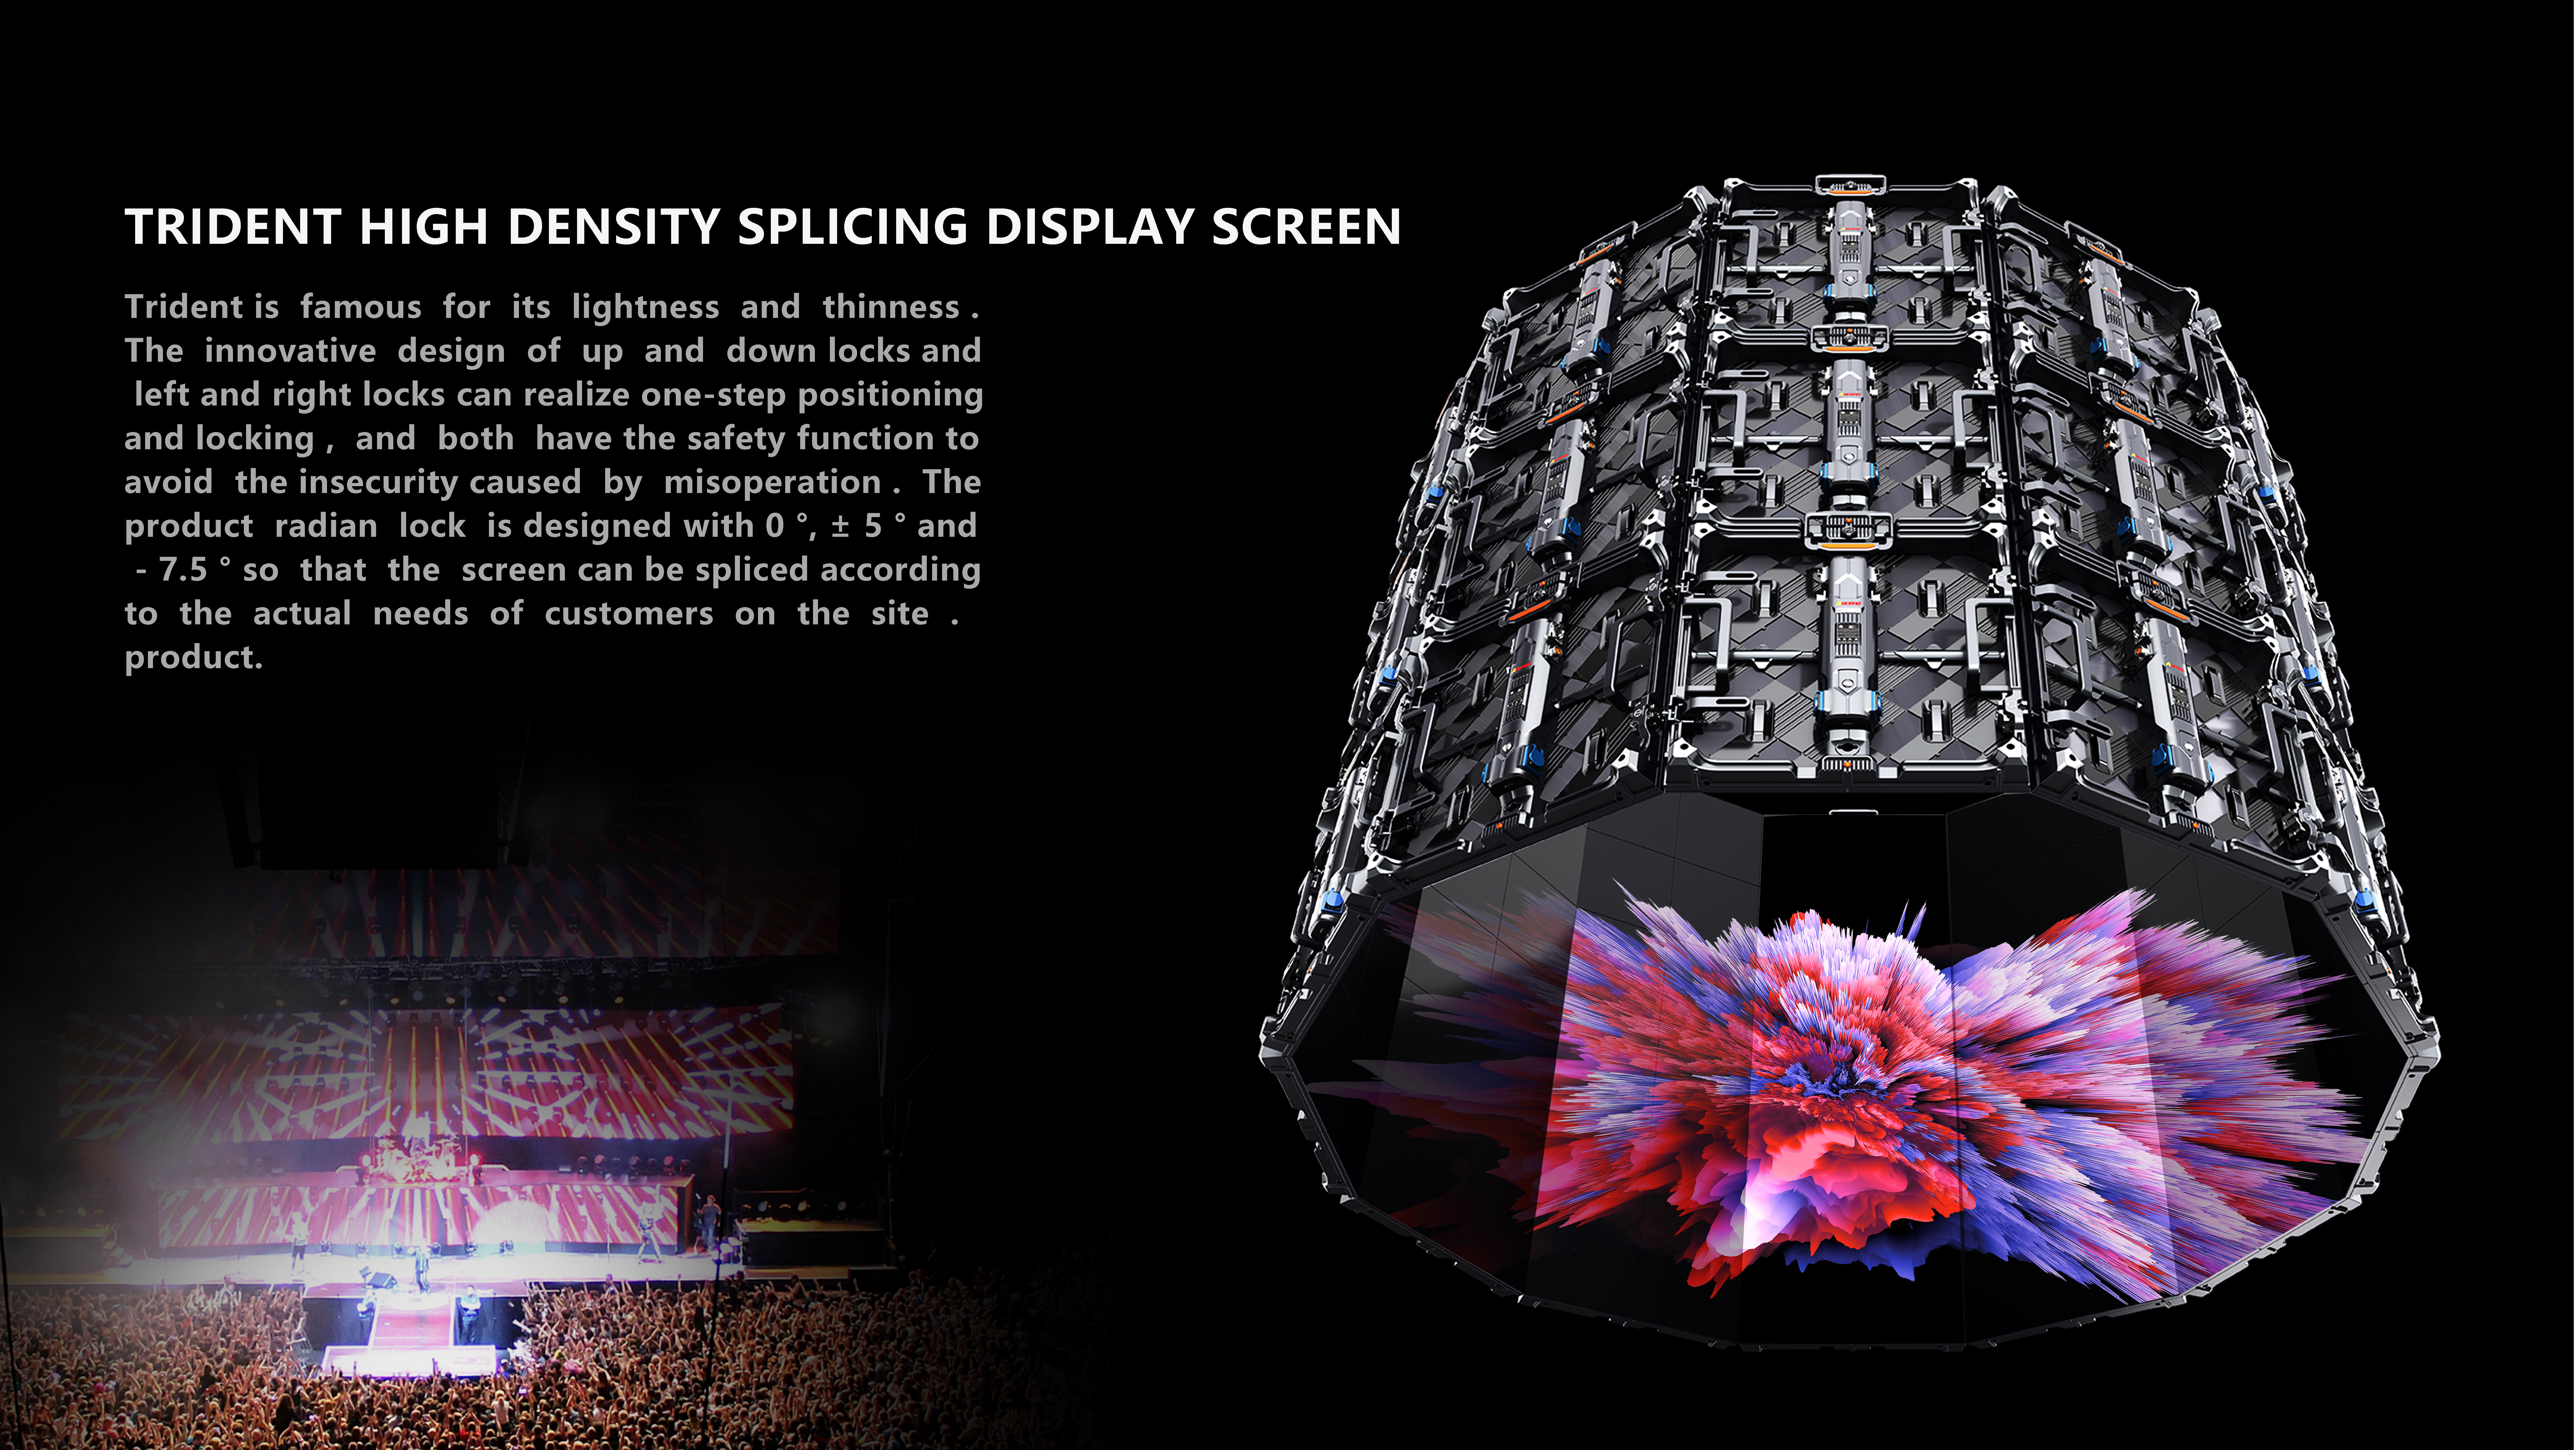 Trident High Density Splicing Display Screen